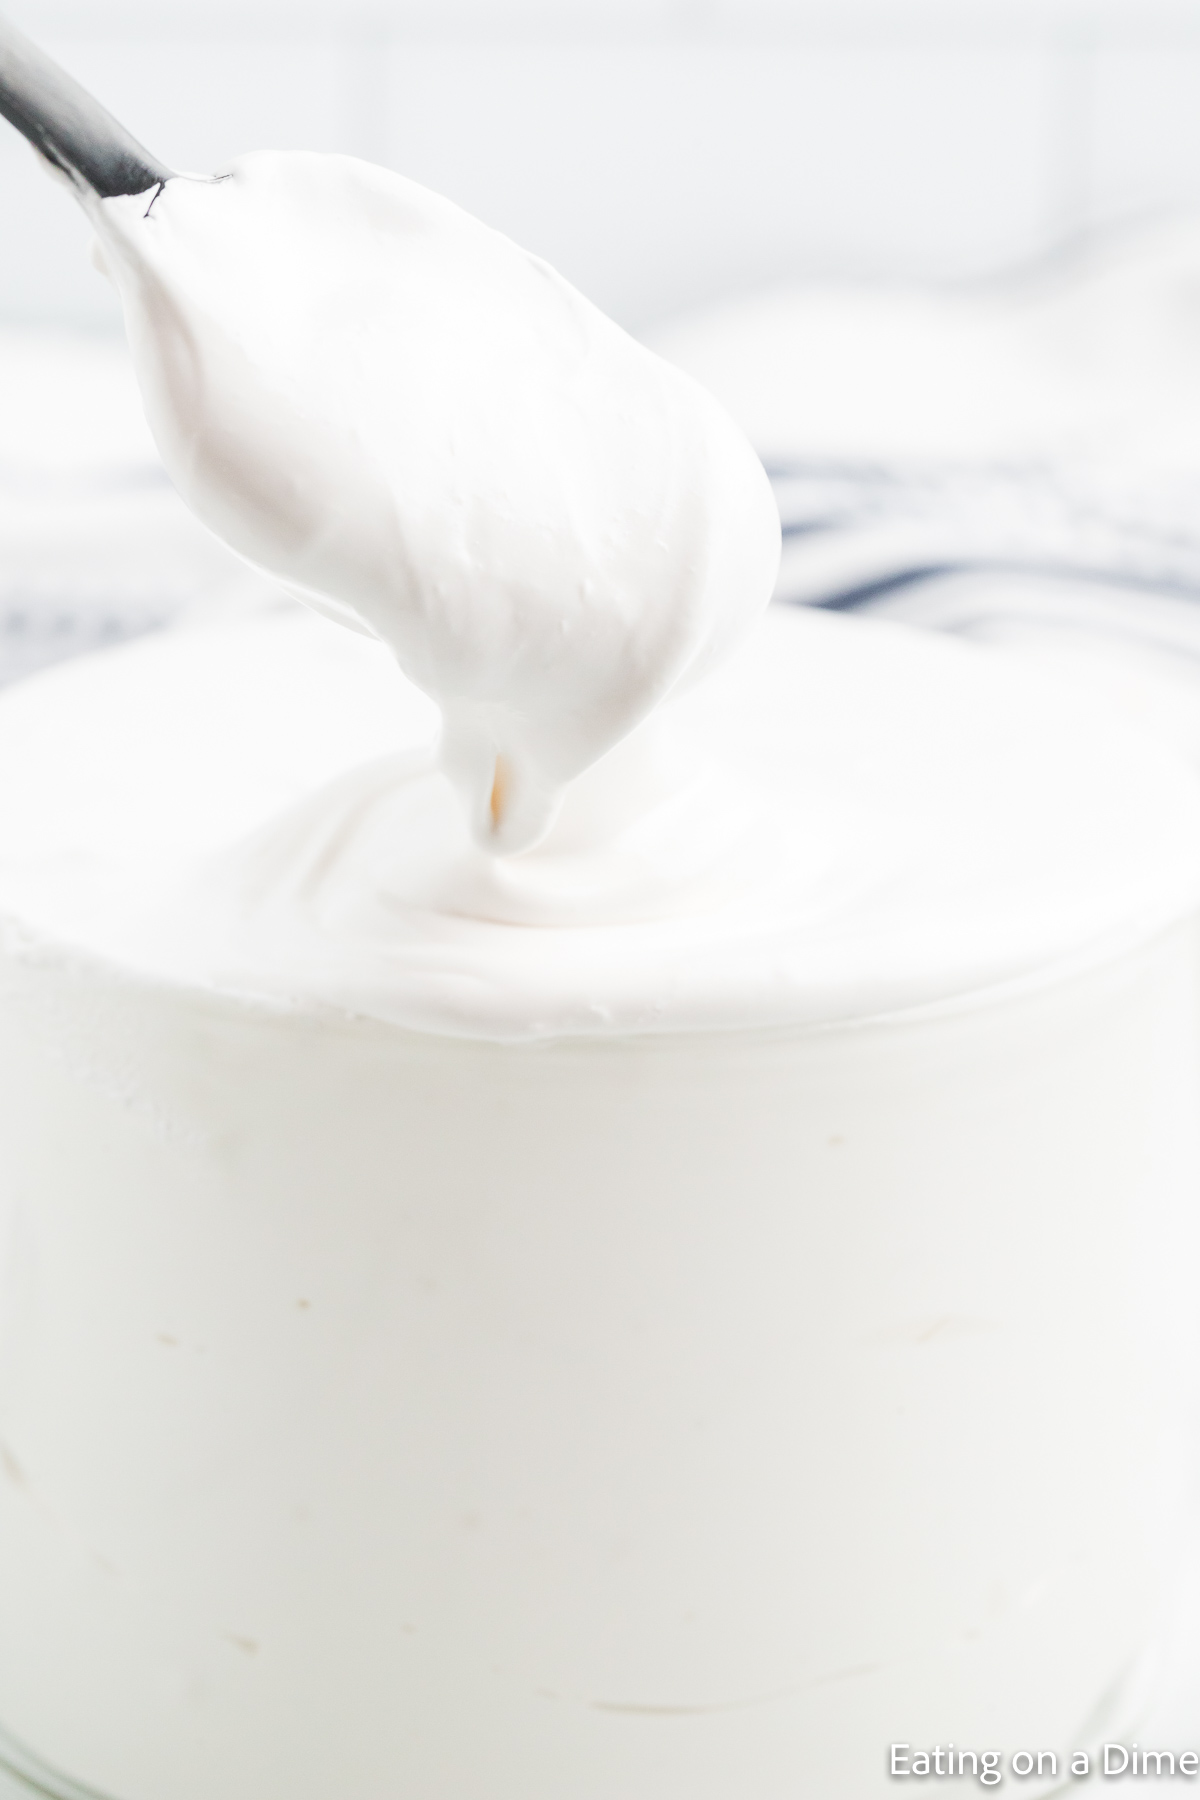 Homemade Marshmallow Fluff Recipe - (Marshmallow Creme)